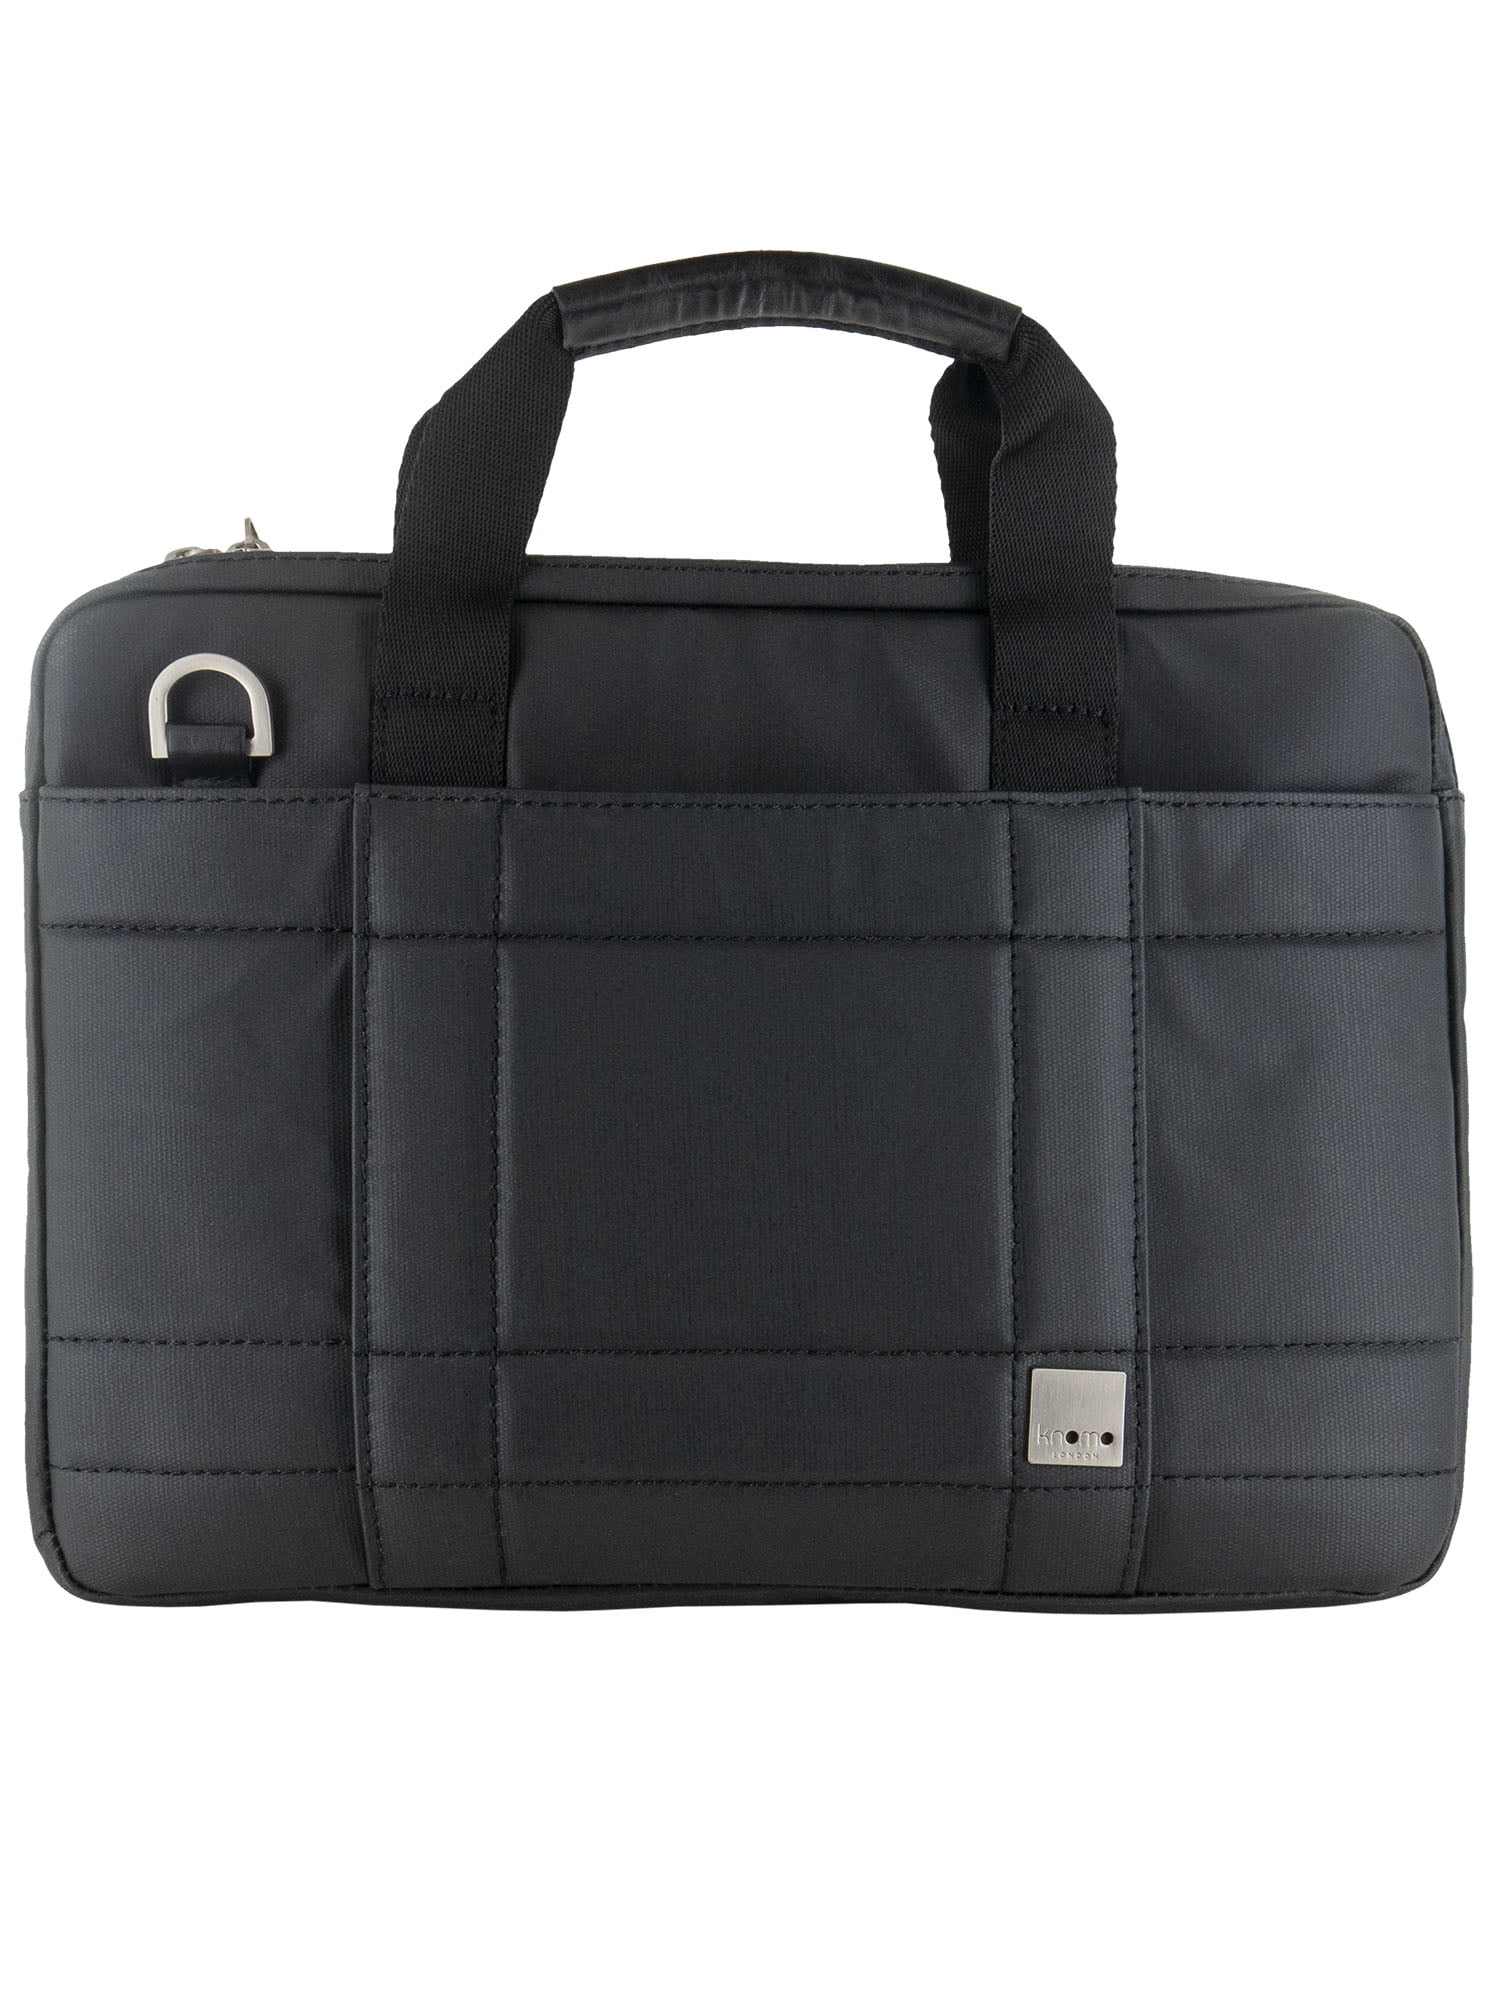 Knomo Jackson Briefcase,Black,one size